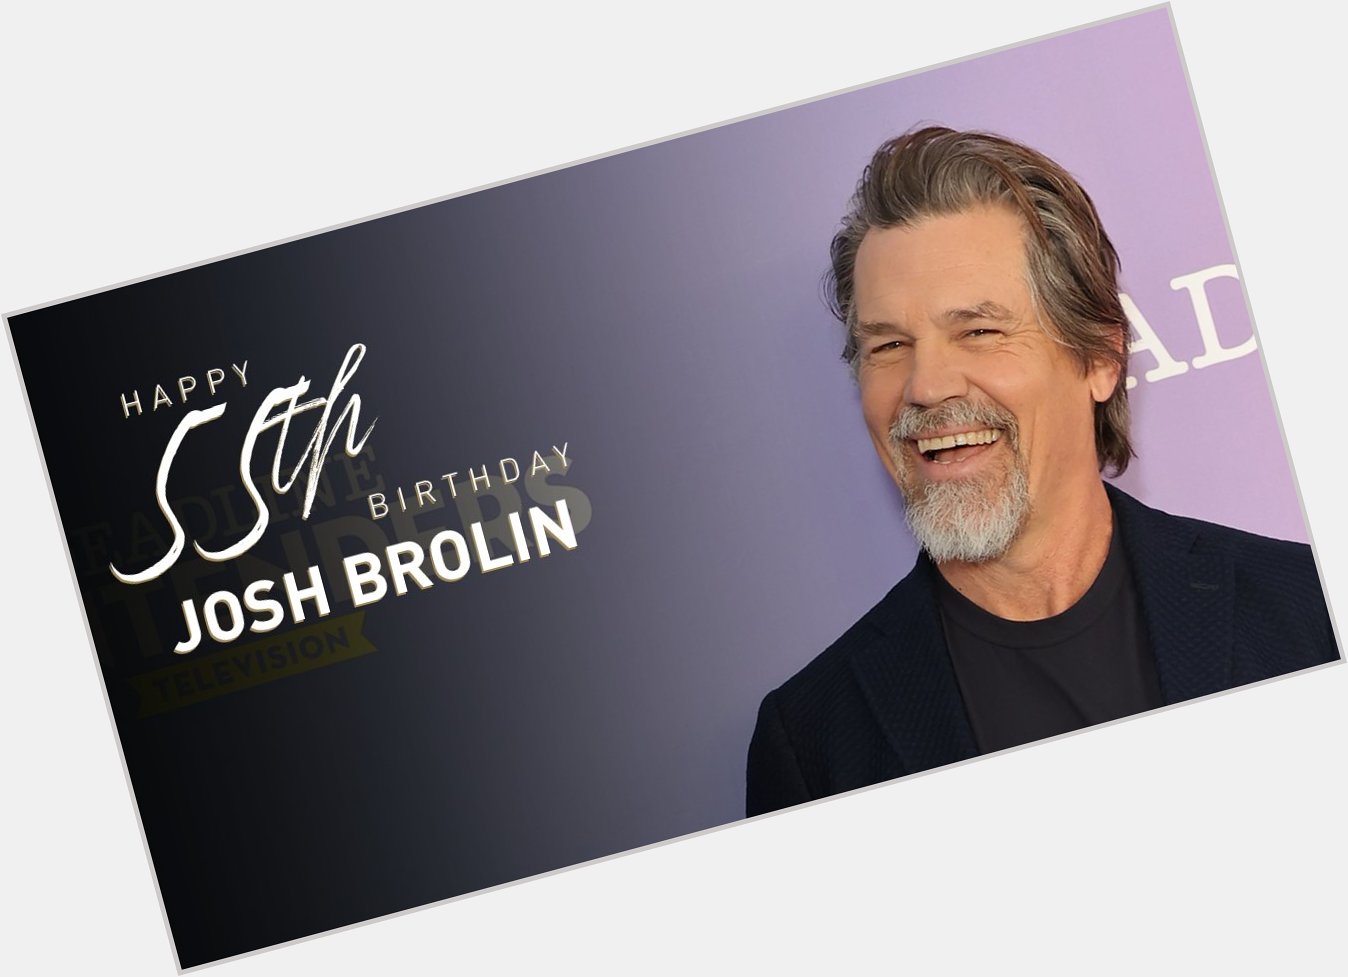 Happy 55th birthday Josh Brolin!

Read his bio here:  